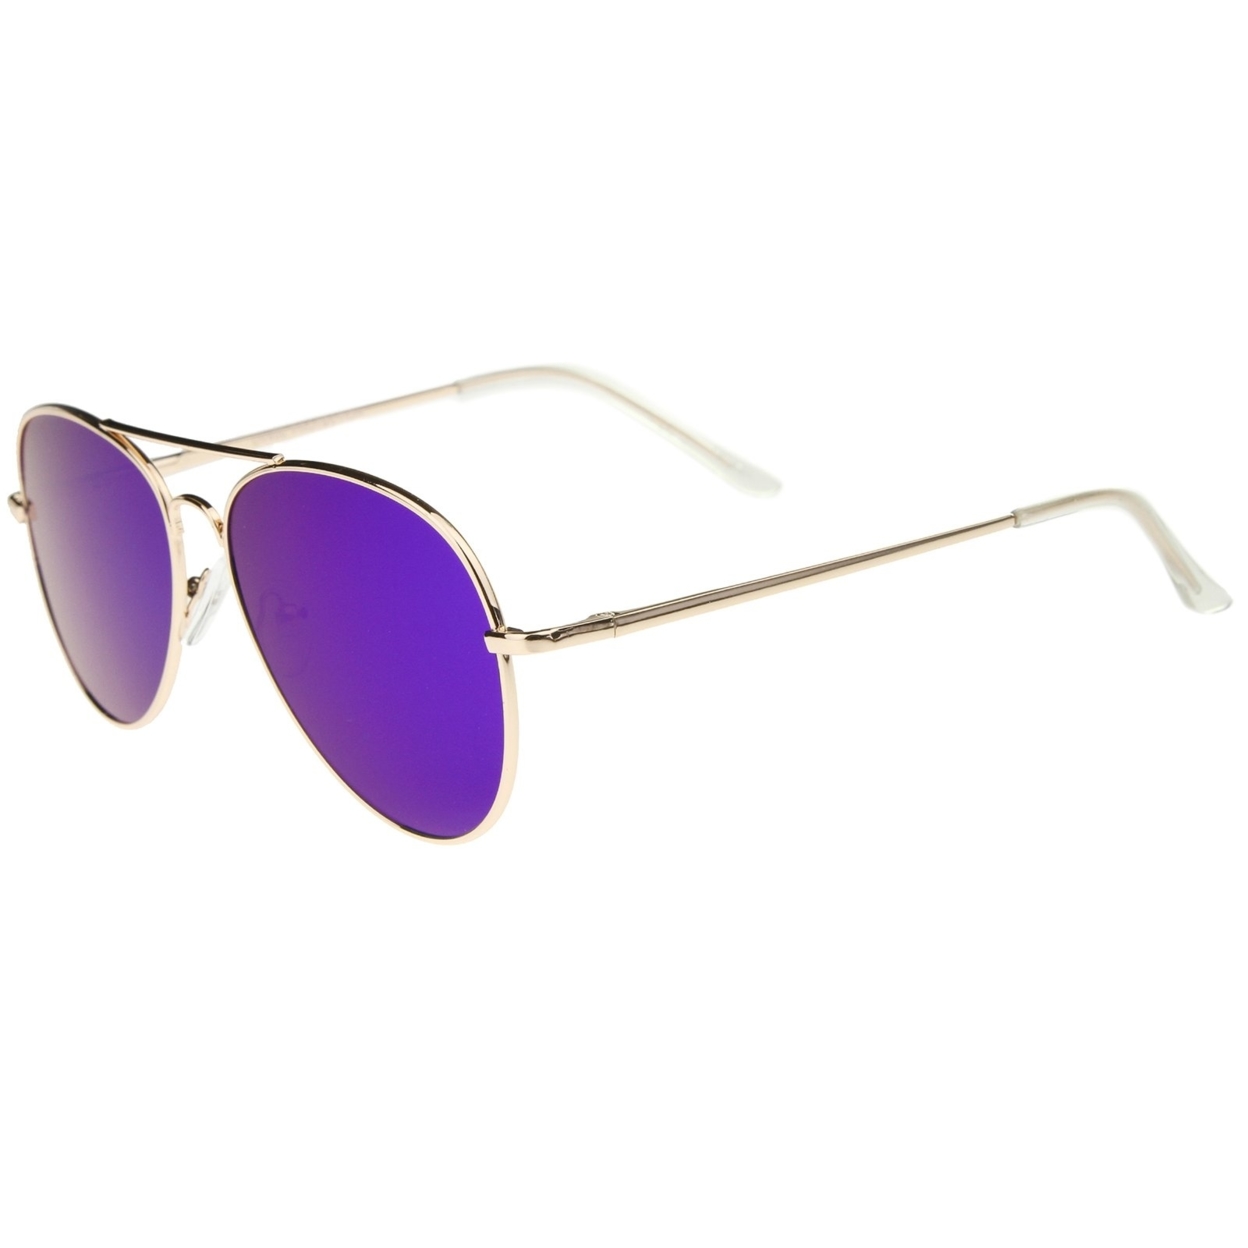 Small Full Metal Color Mirror Teardrop Flat Lens Aviator Sunglasses 56mm - Gold / Yellow Mirror